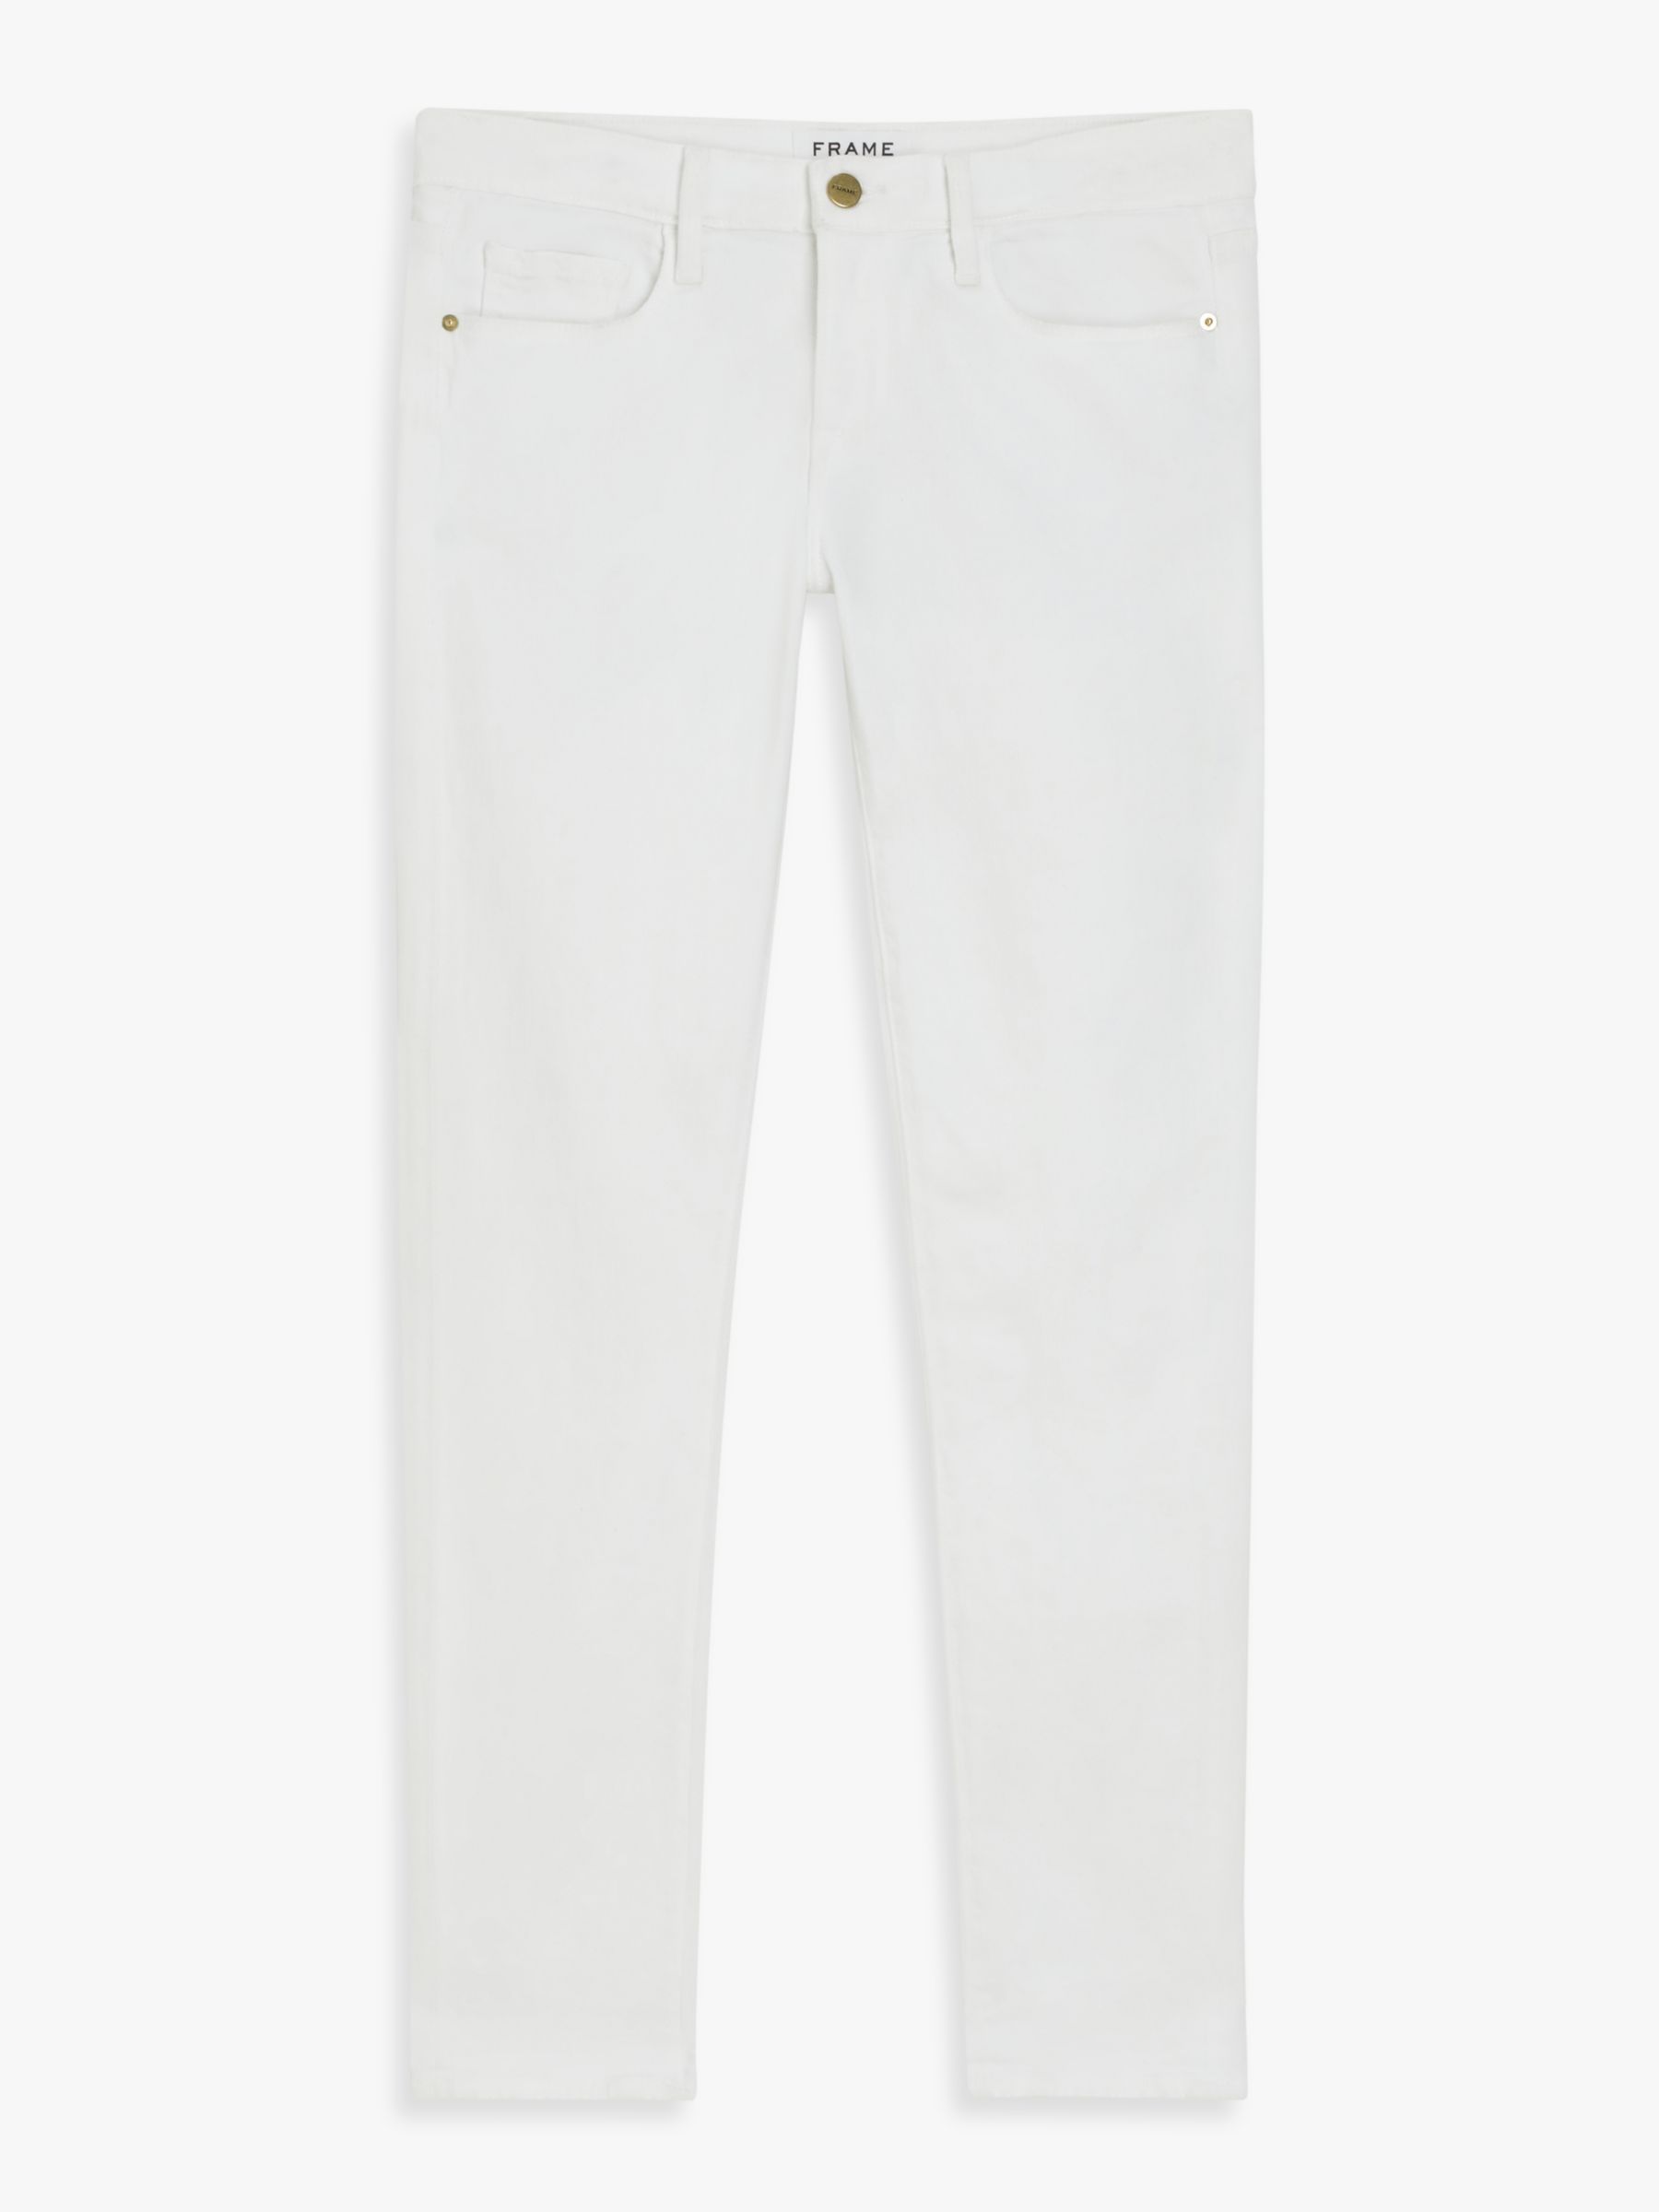 FRAME Le Garcon Boyfriend Jeans, White at John Lewis & Partners